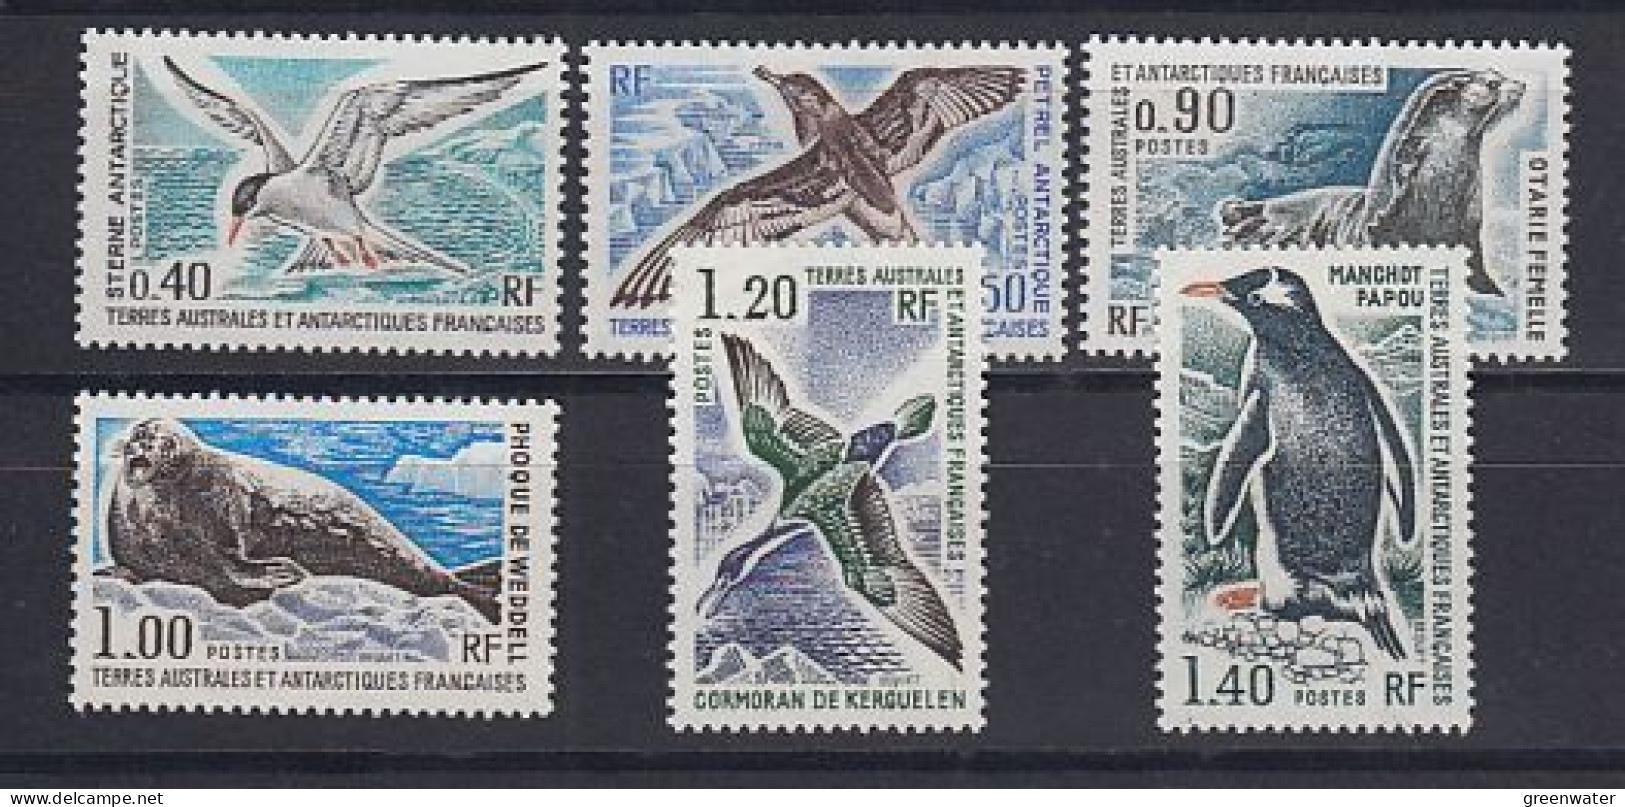 TAAF 1976  Antarctic Animals 6v ** Mnh (59765C) - Unused Stamps